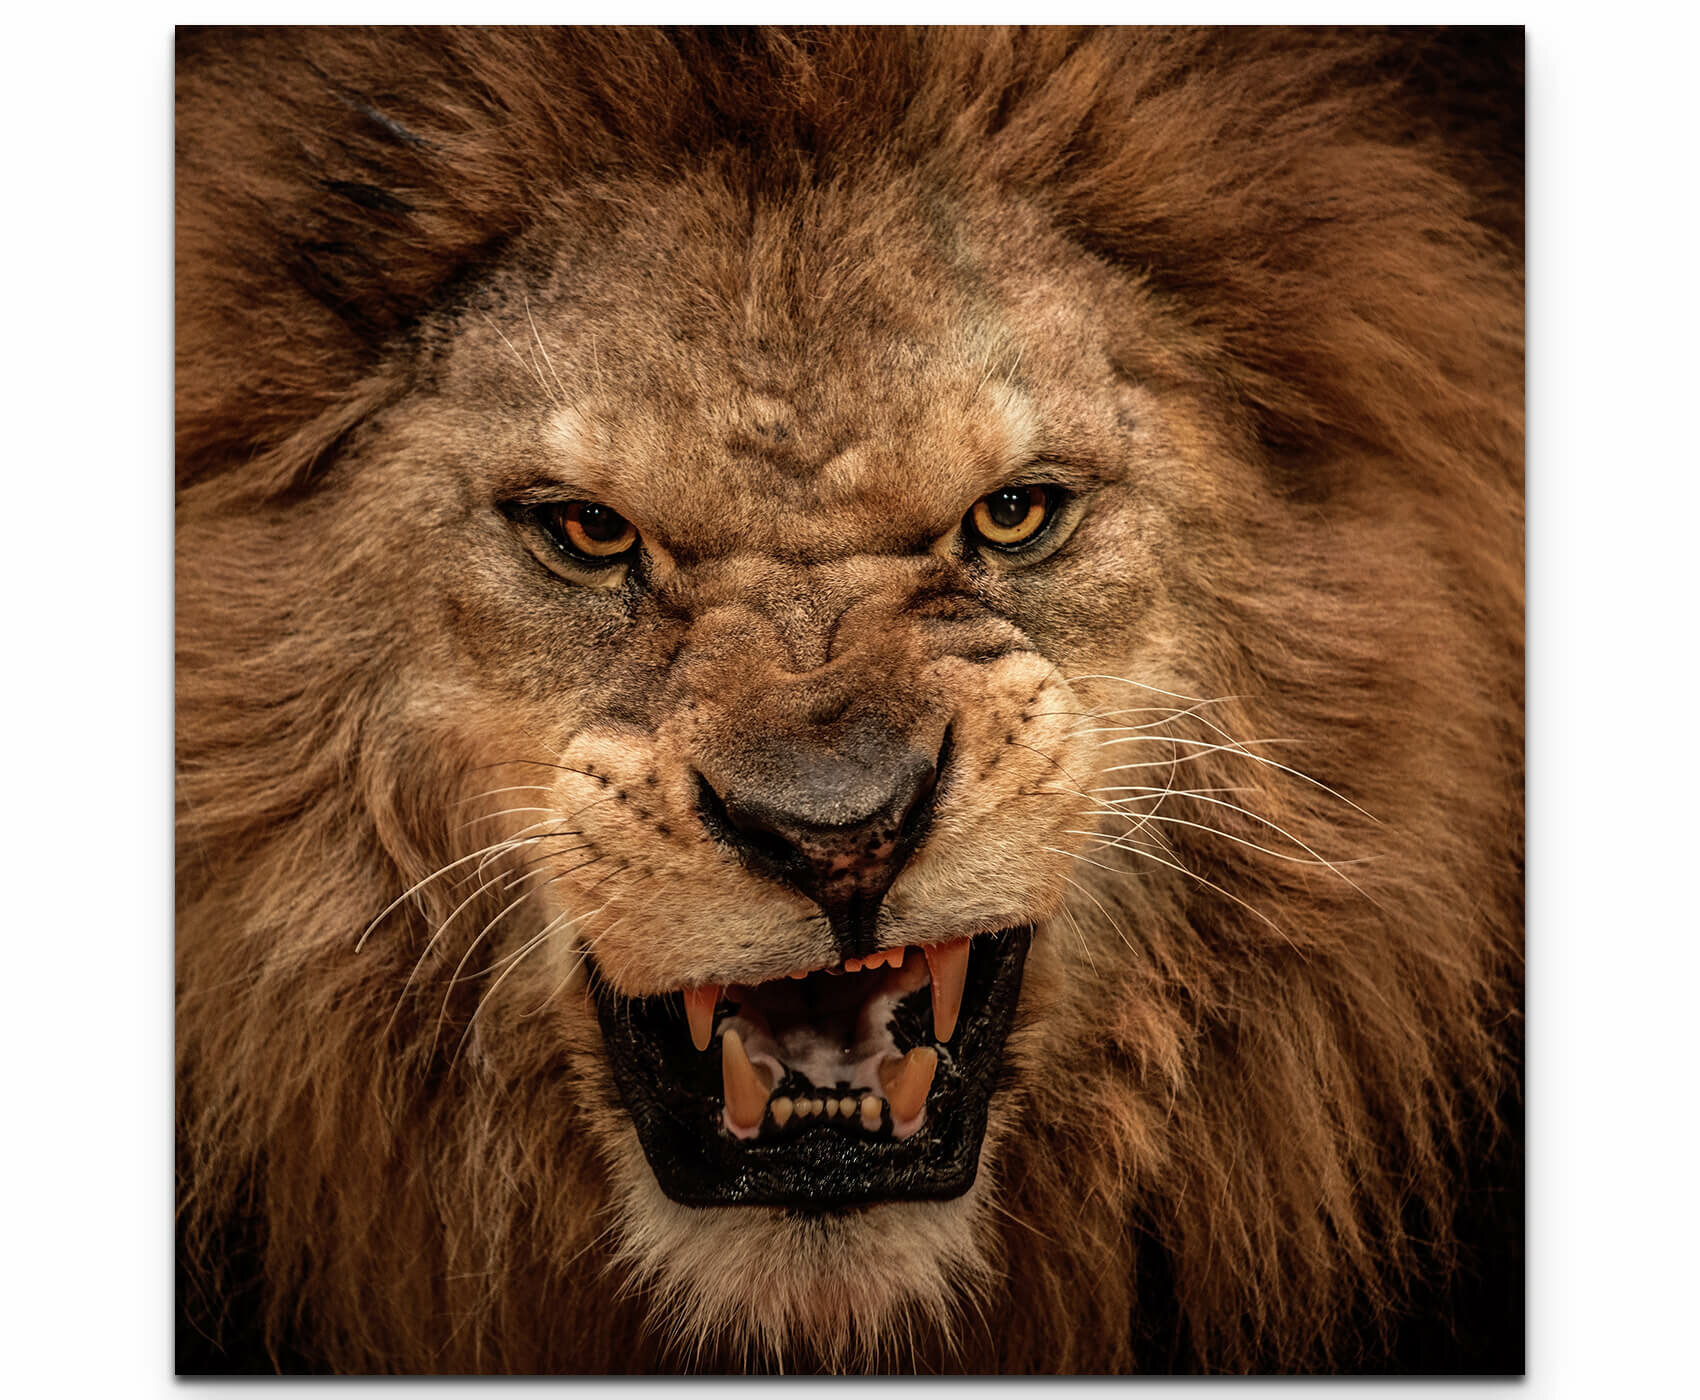 roaring lion images free download